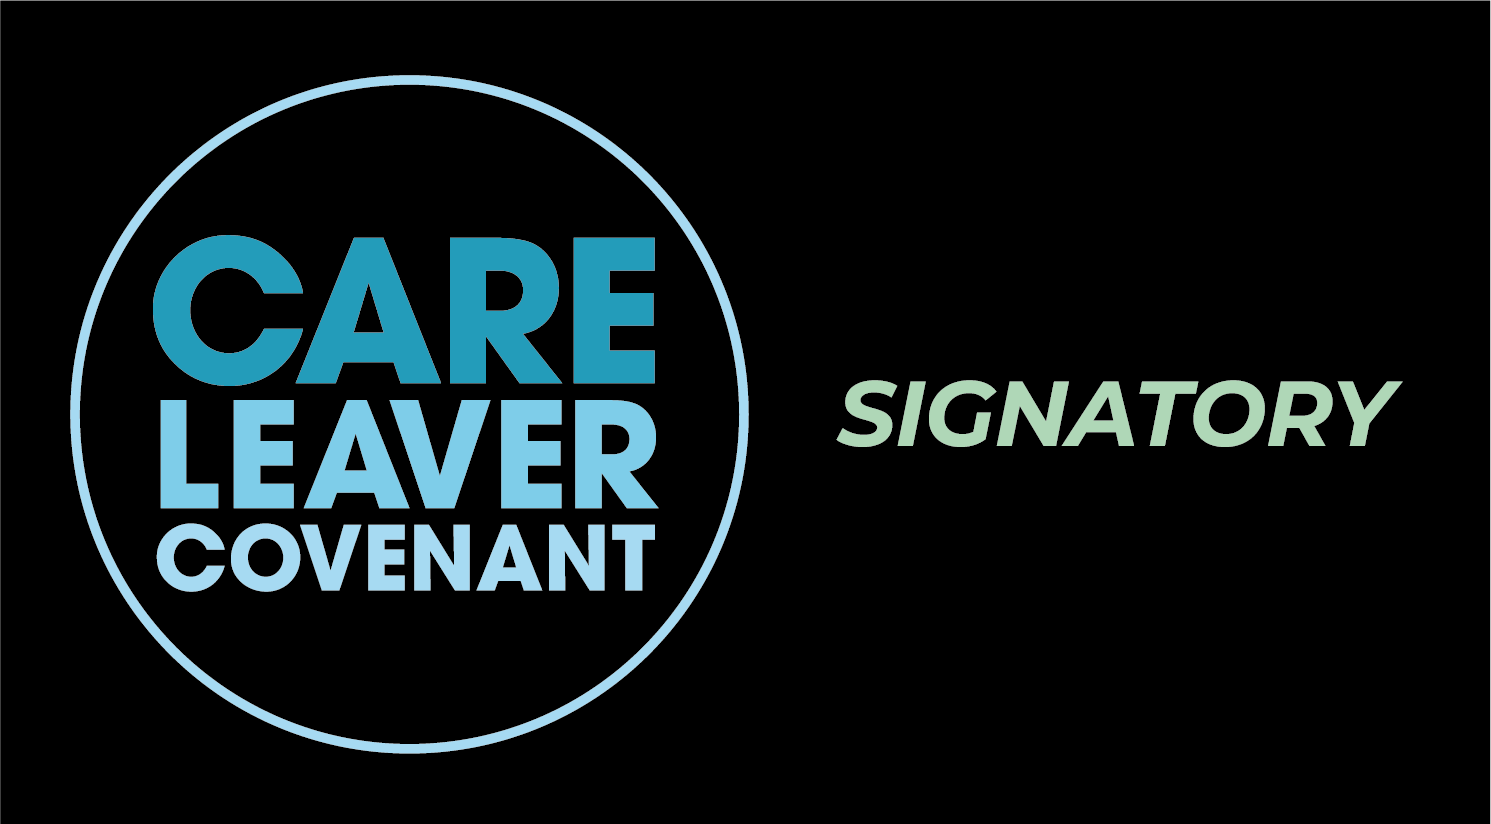 Care Leaver Covenant signatory badge